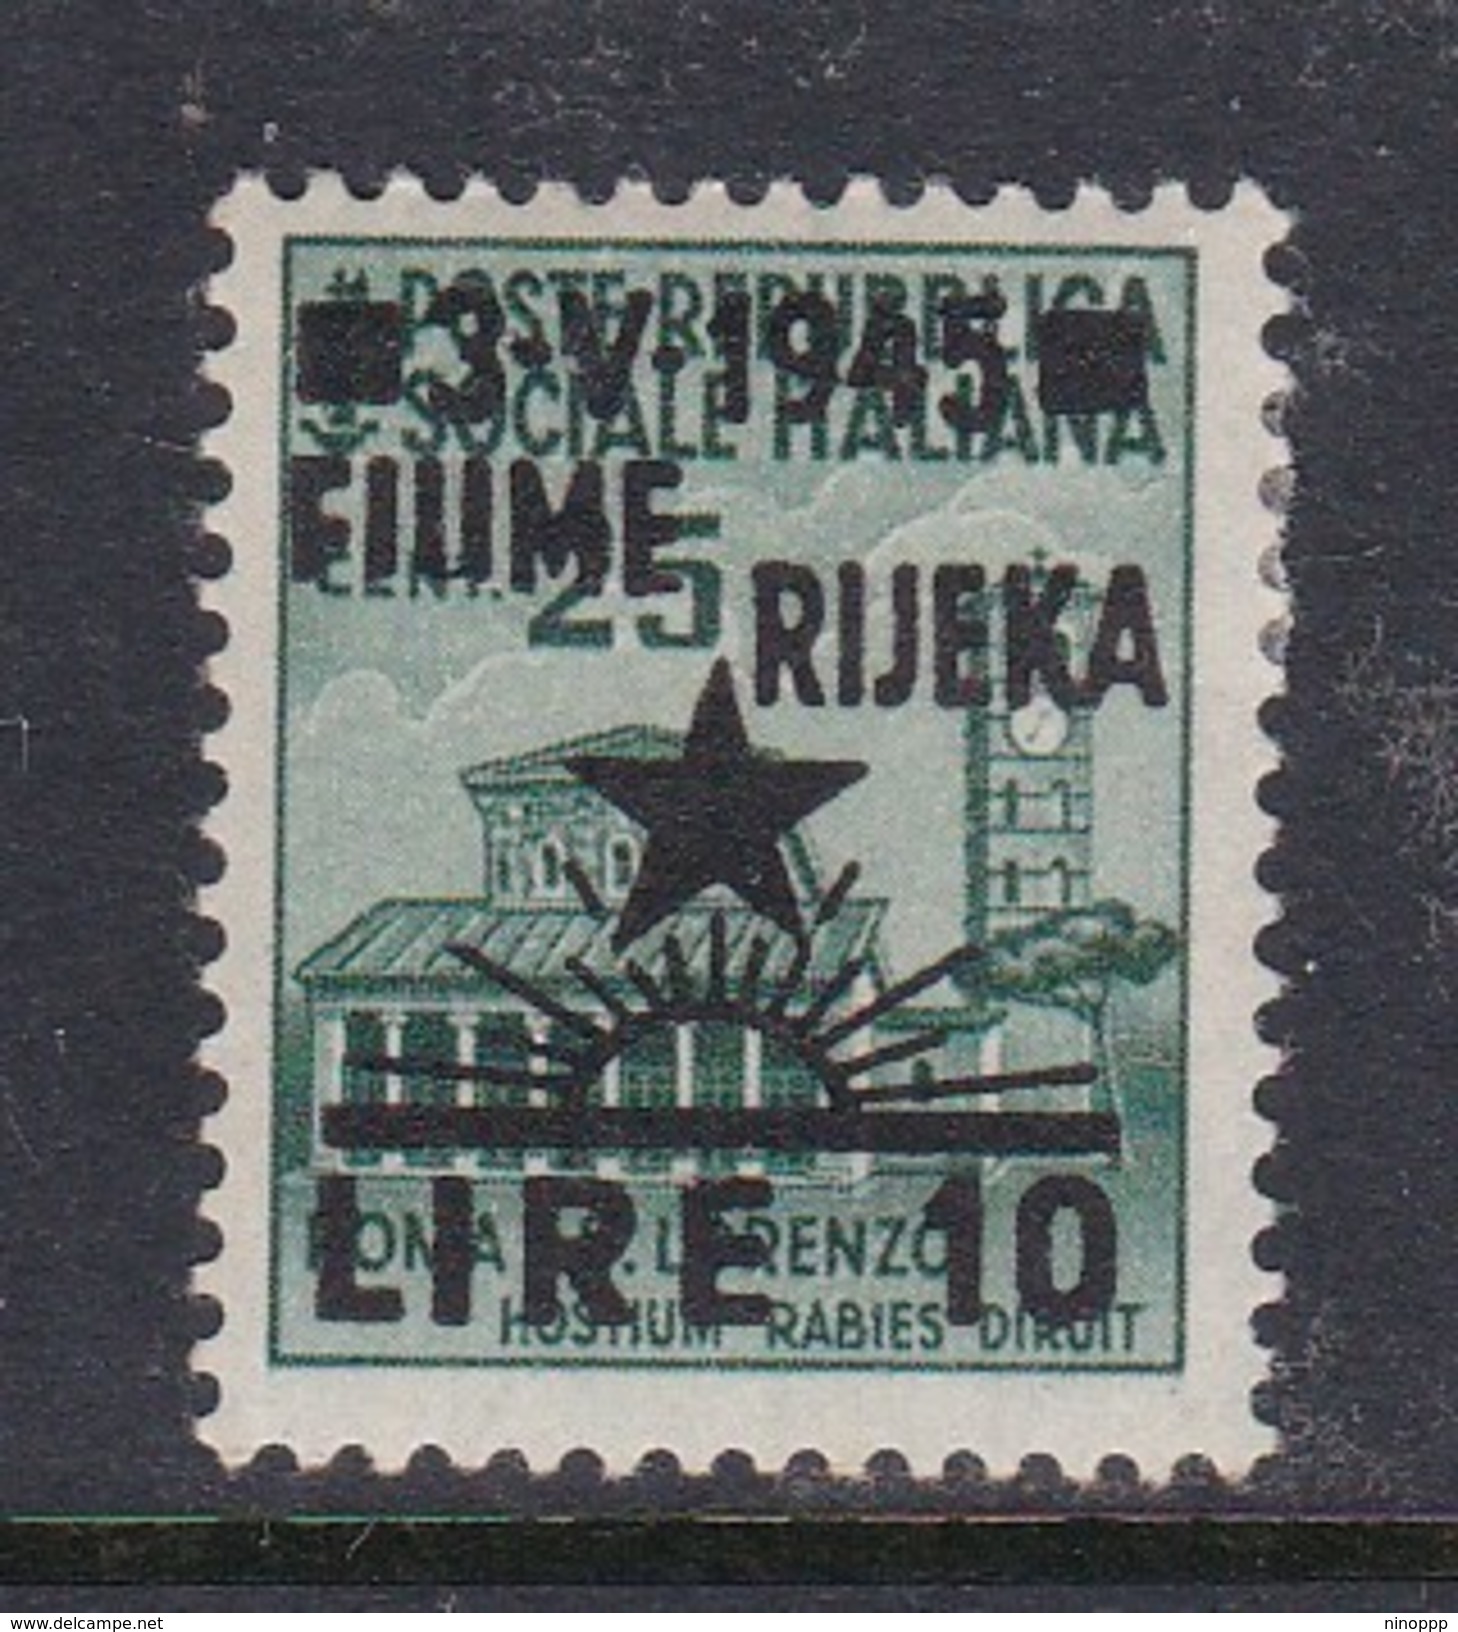 Venezia Giulia And Istria  Fiume Rijeka S 18 1945 10 Lira On 25c Green Mint Hinged - Occ. Yougoslave: Fiume